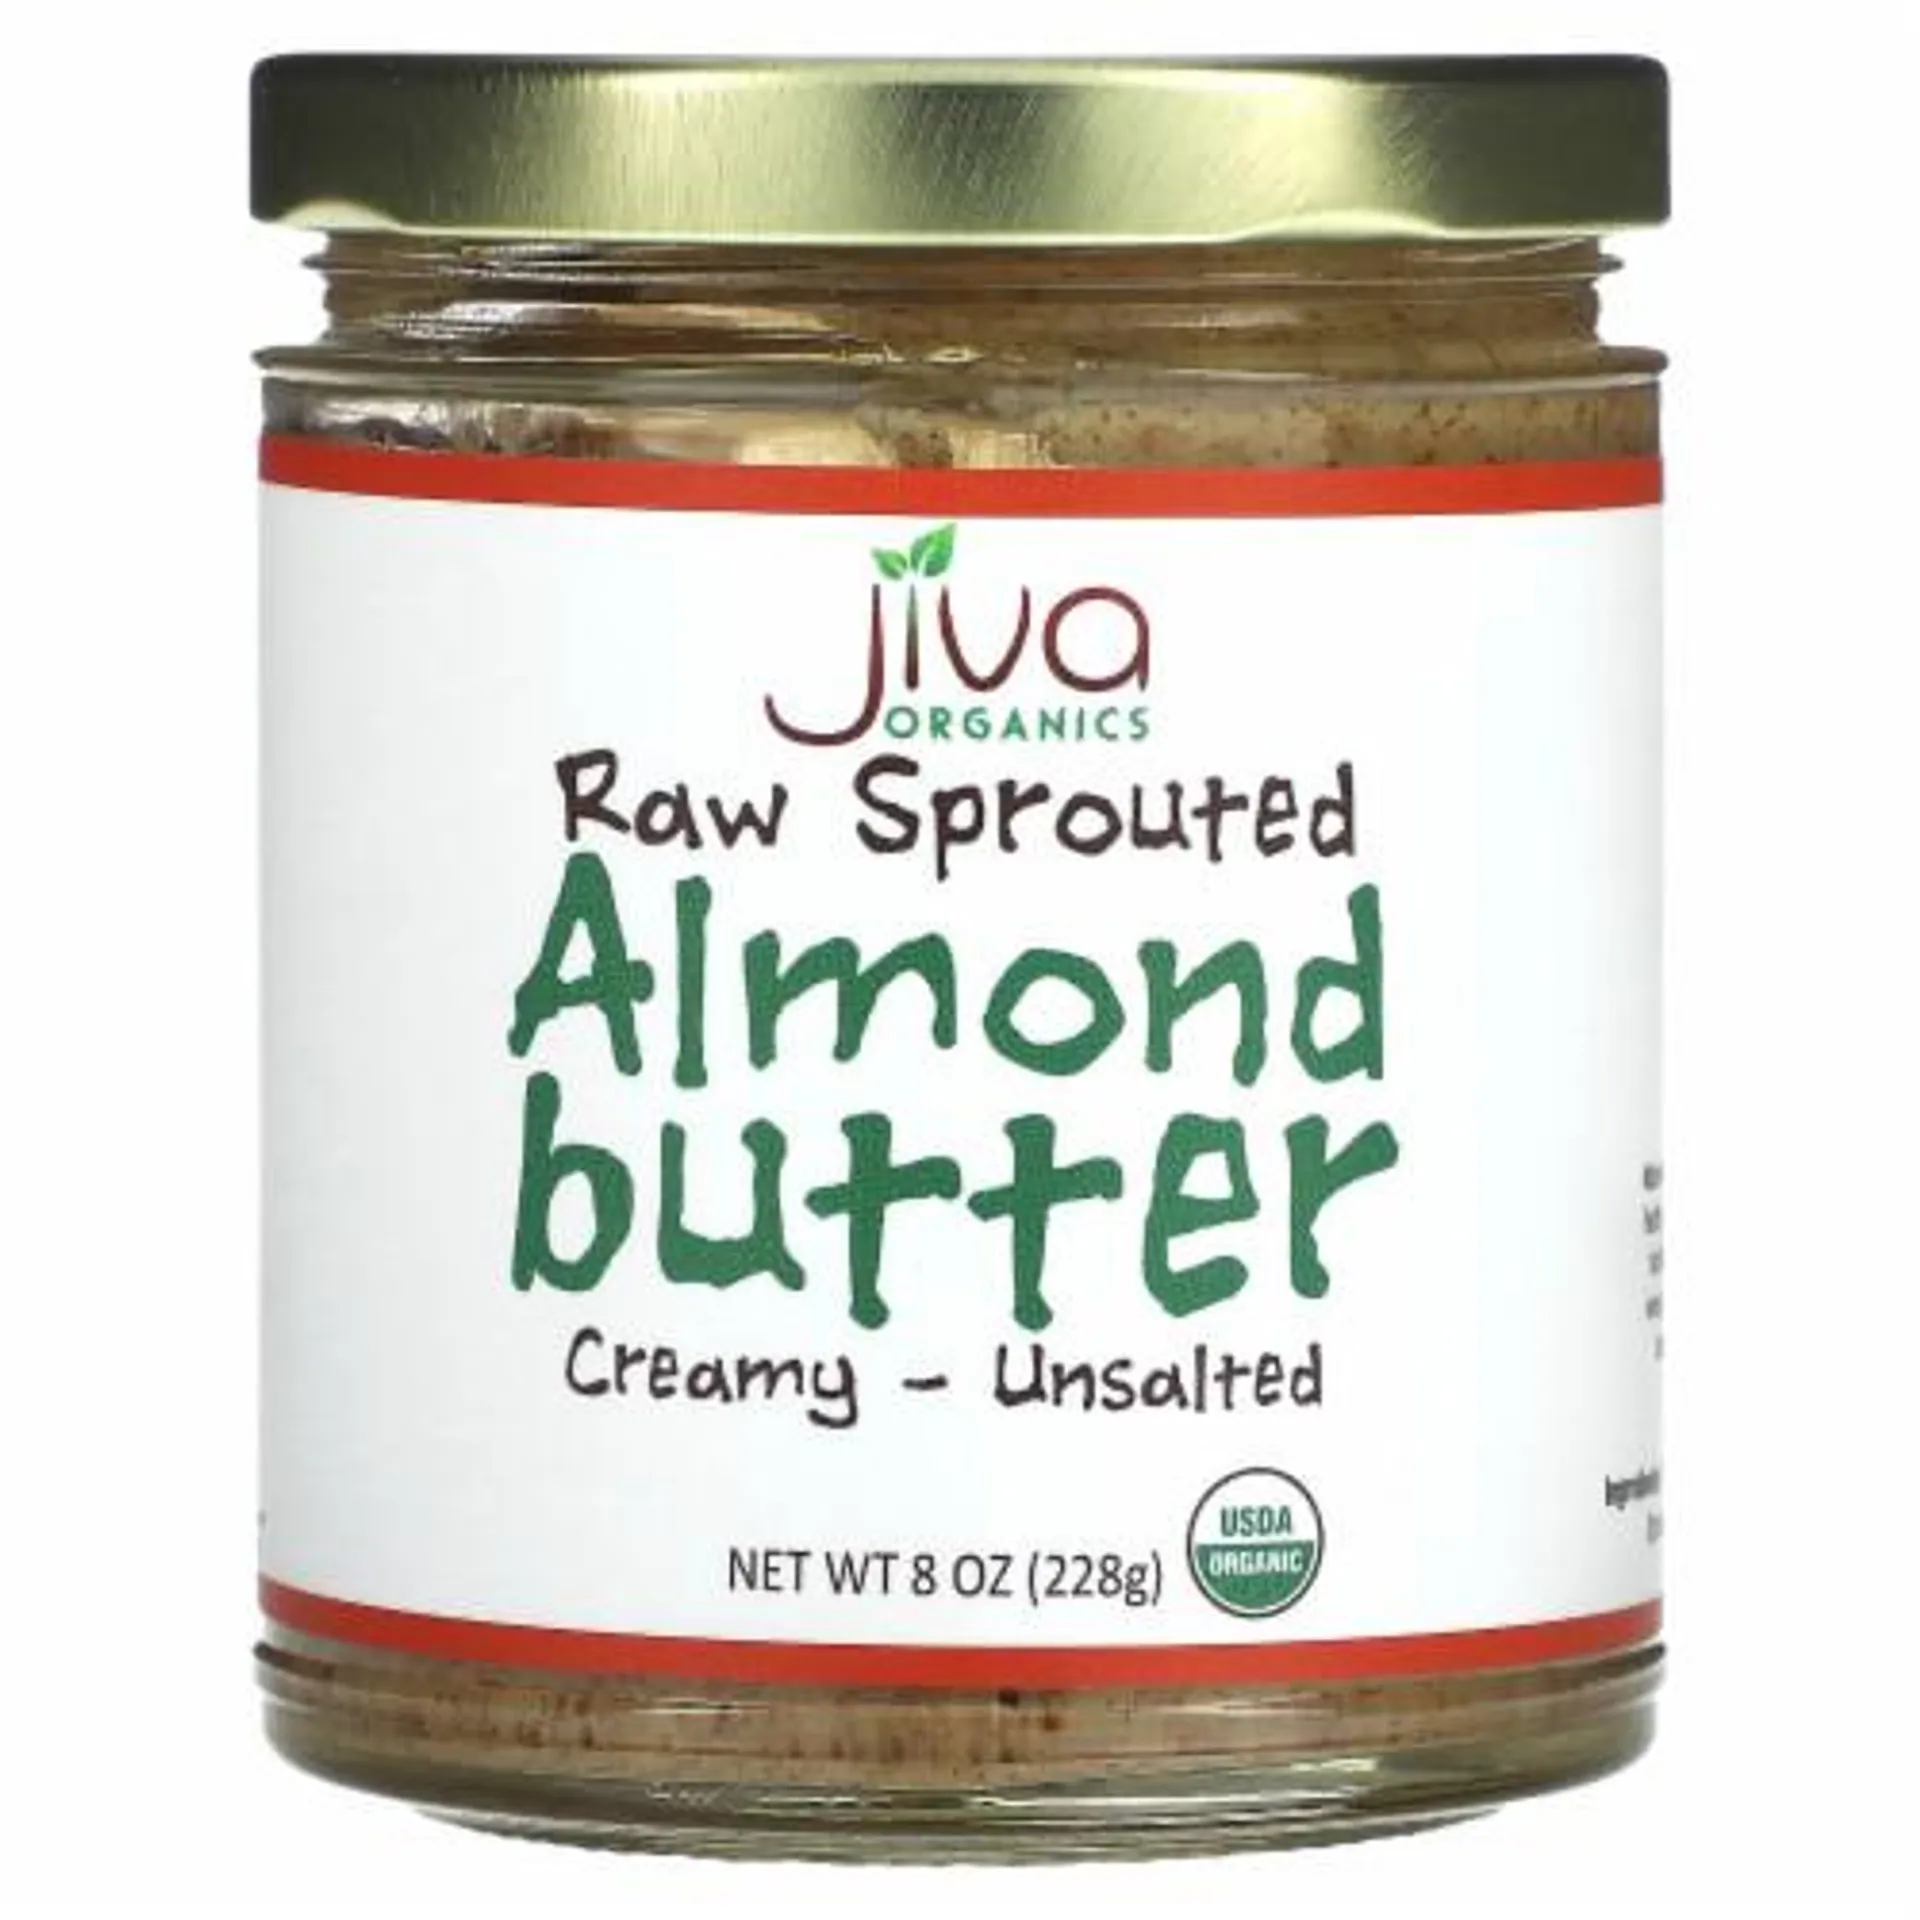 Jiva Organics Raw Sprouted Almond Butter Creamy - Unsalted - 8 oz (228 g)